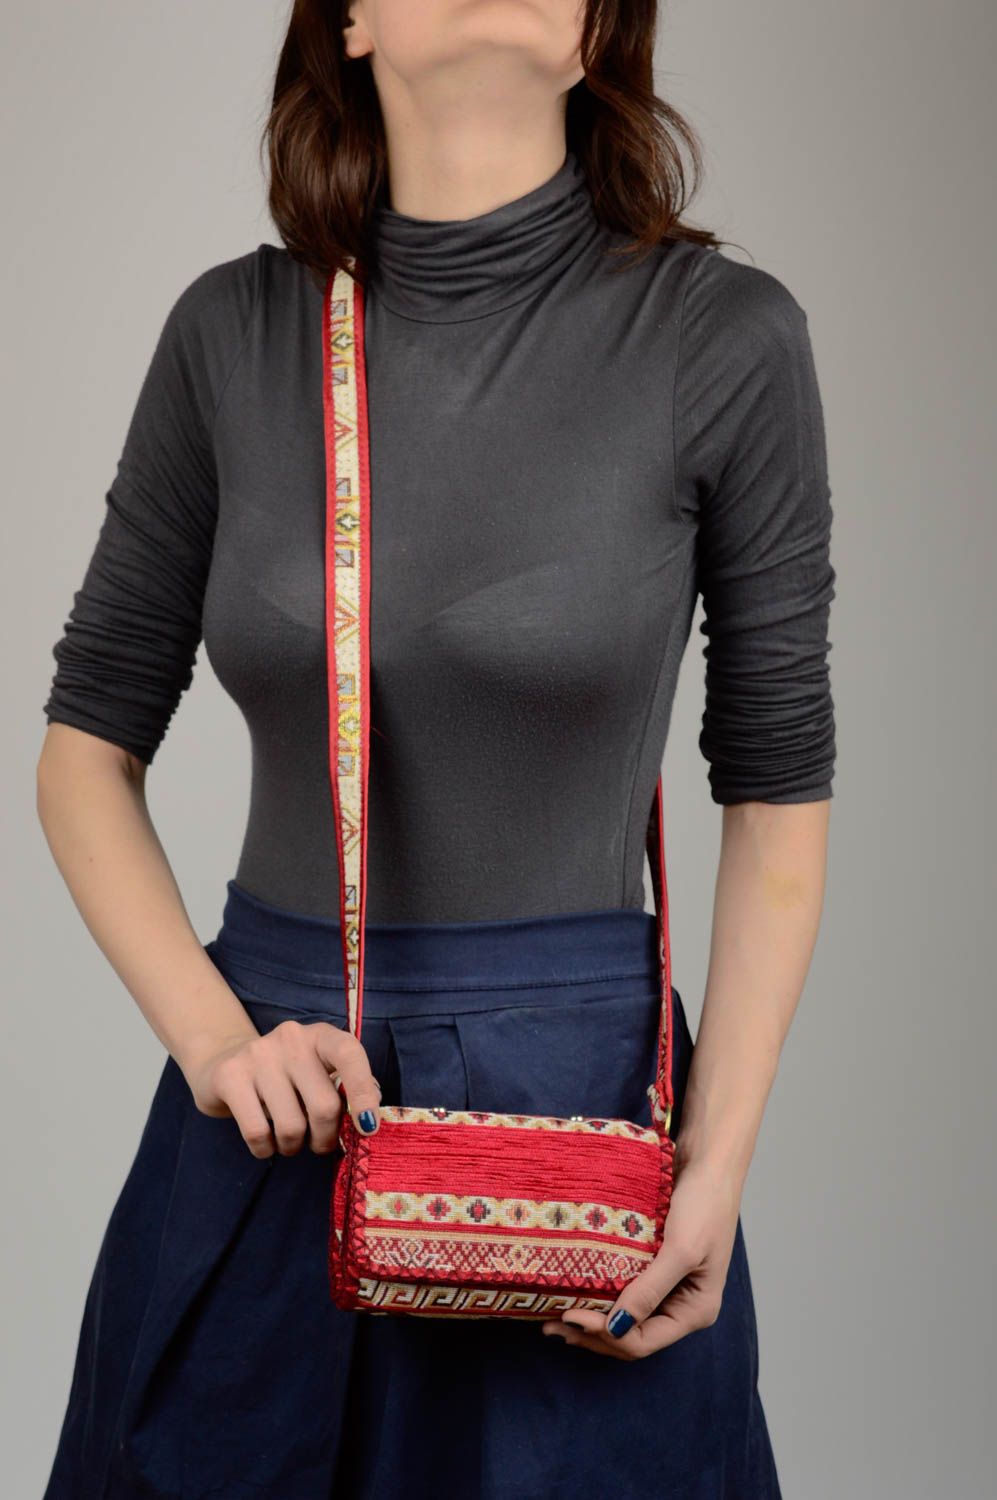 Handmade bag for women shoulder bag stylish fabric accessory fashion present photo 2